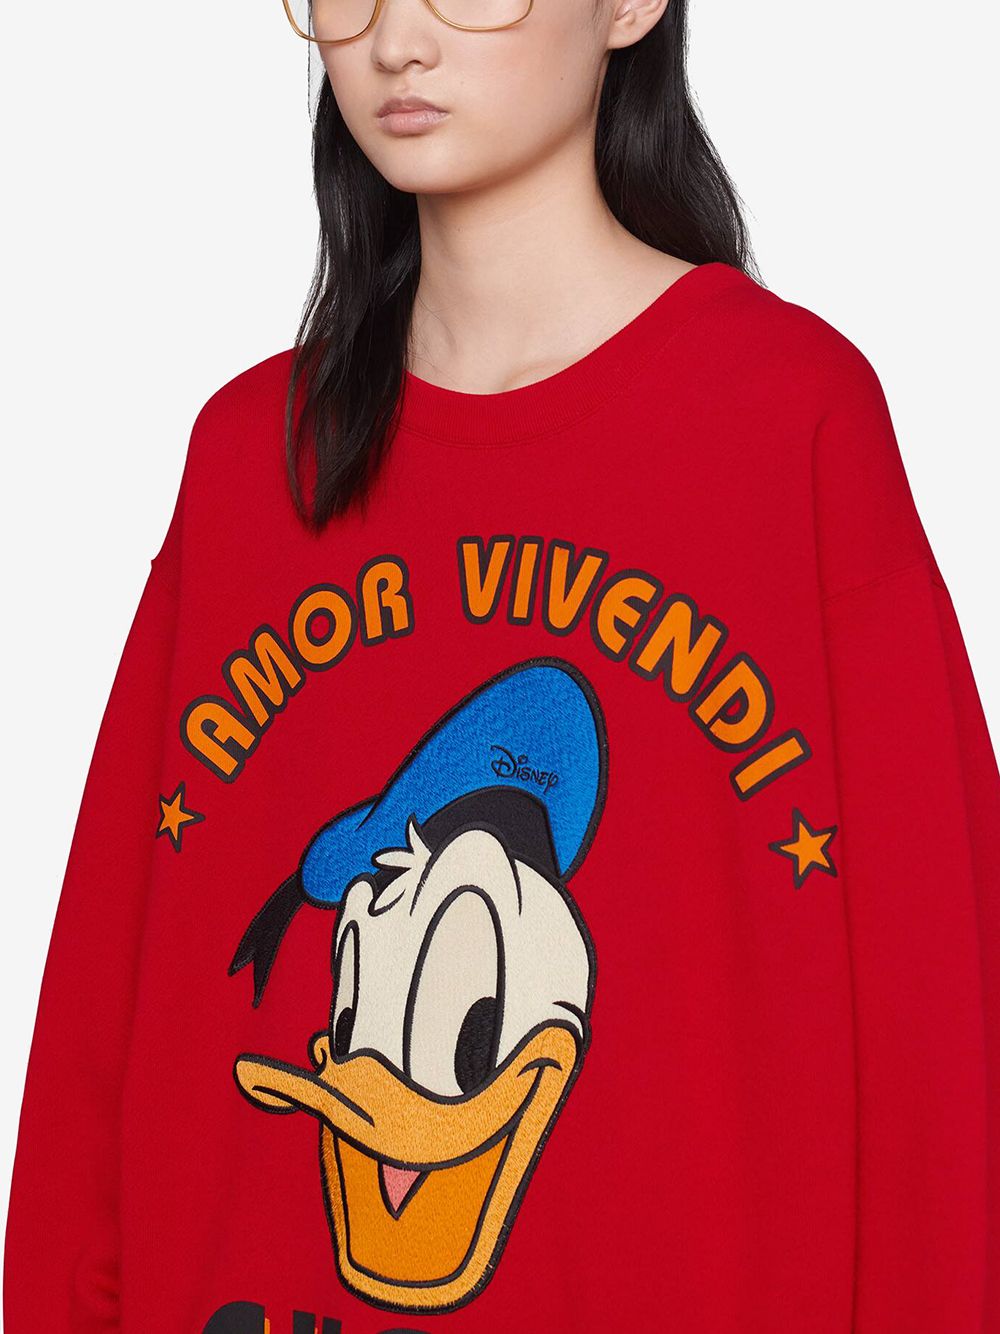 Gucci x Disney Donald Duck Print T-shirt - Farfetch